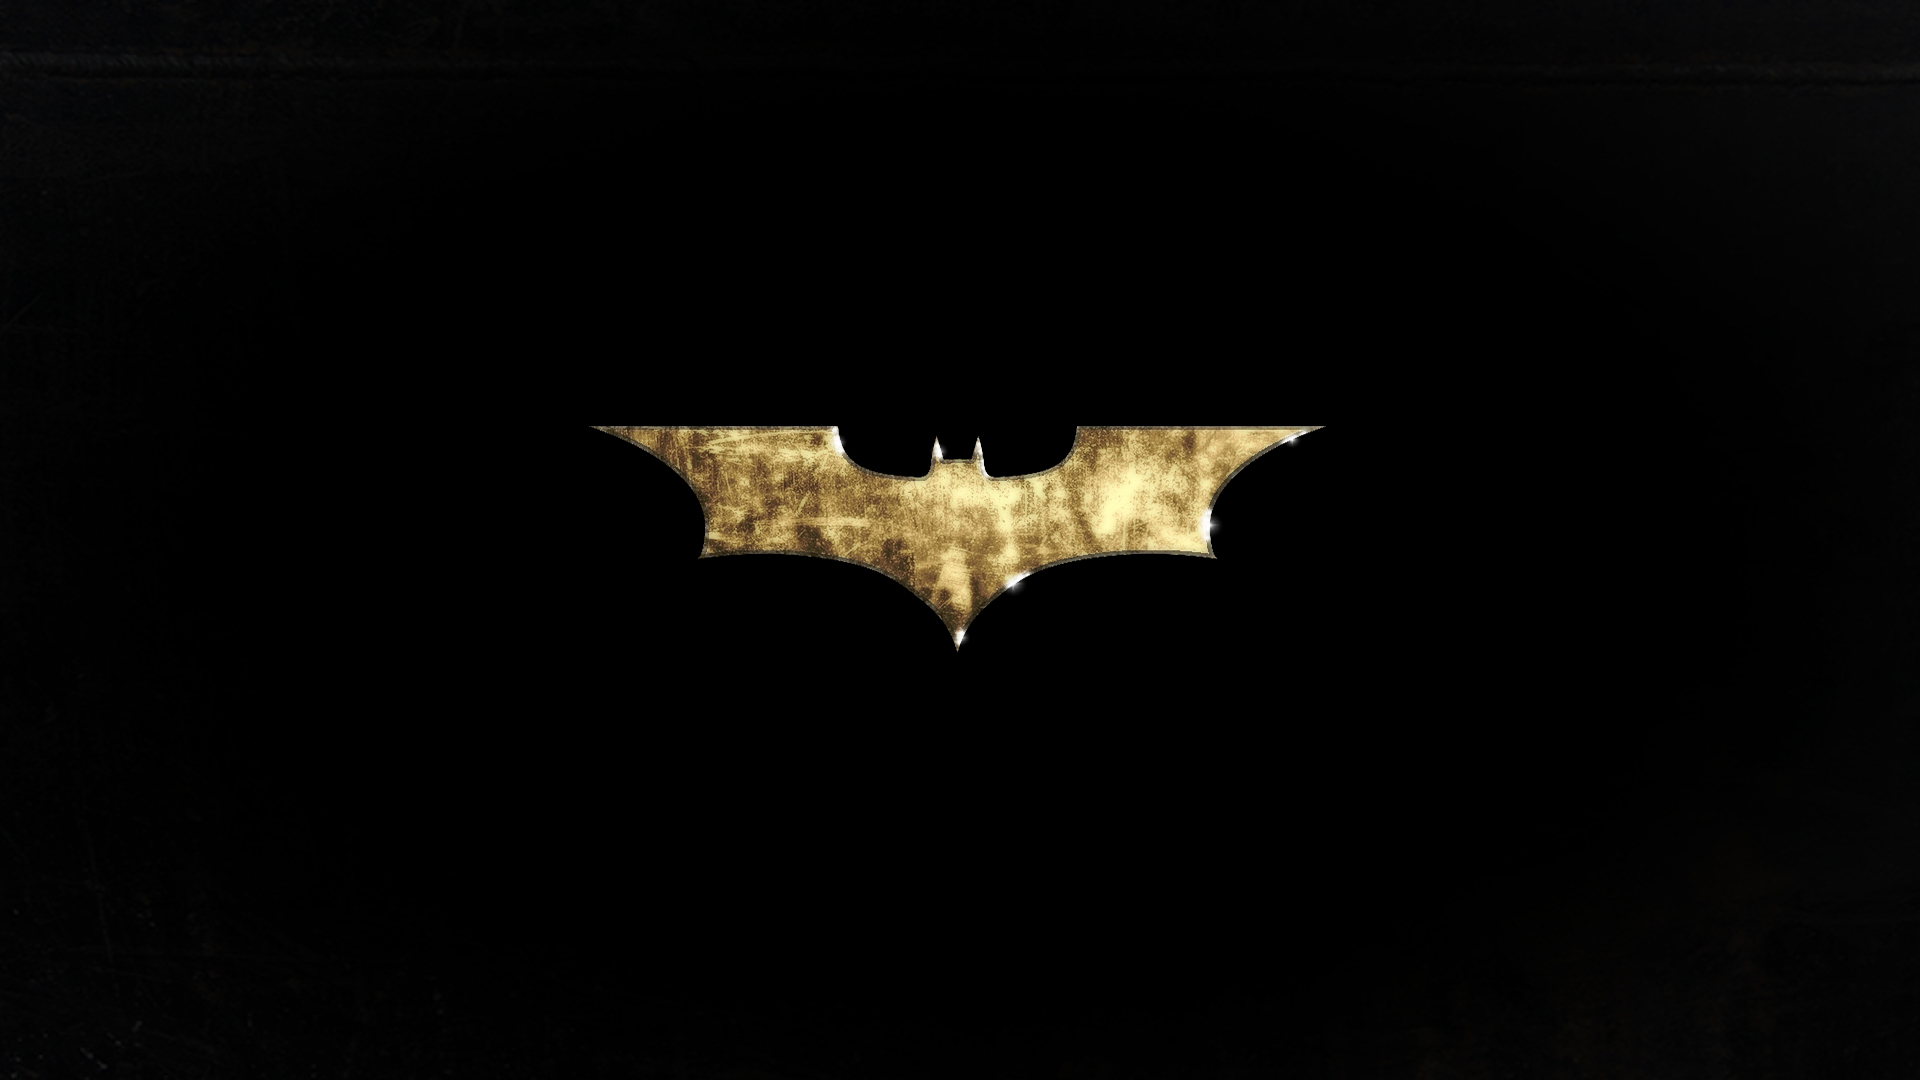 Batman Desktop Wallpaper Widescreen (58+ images)